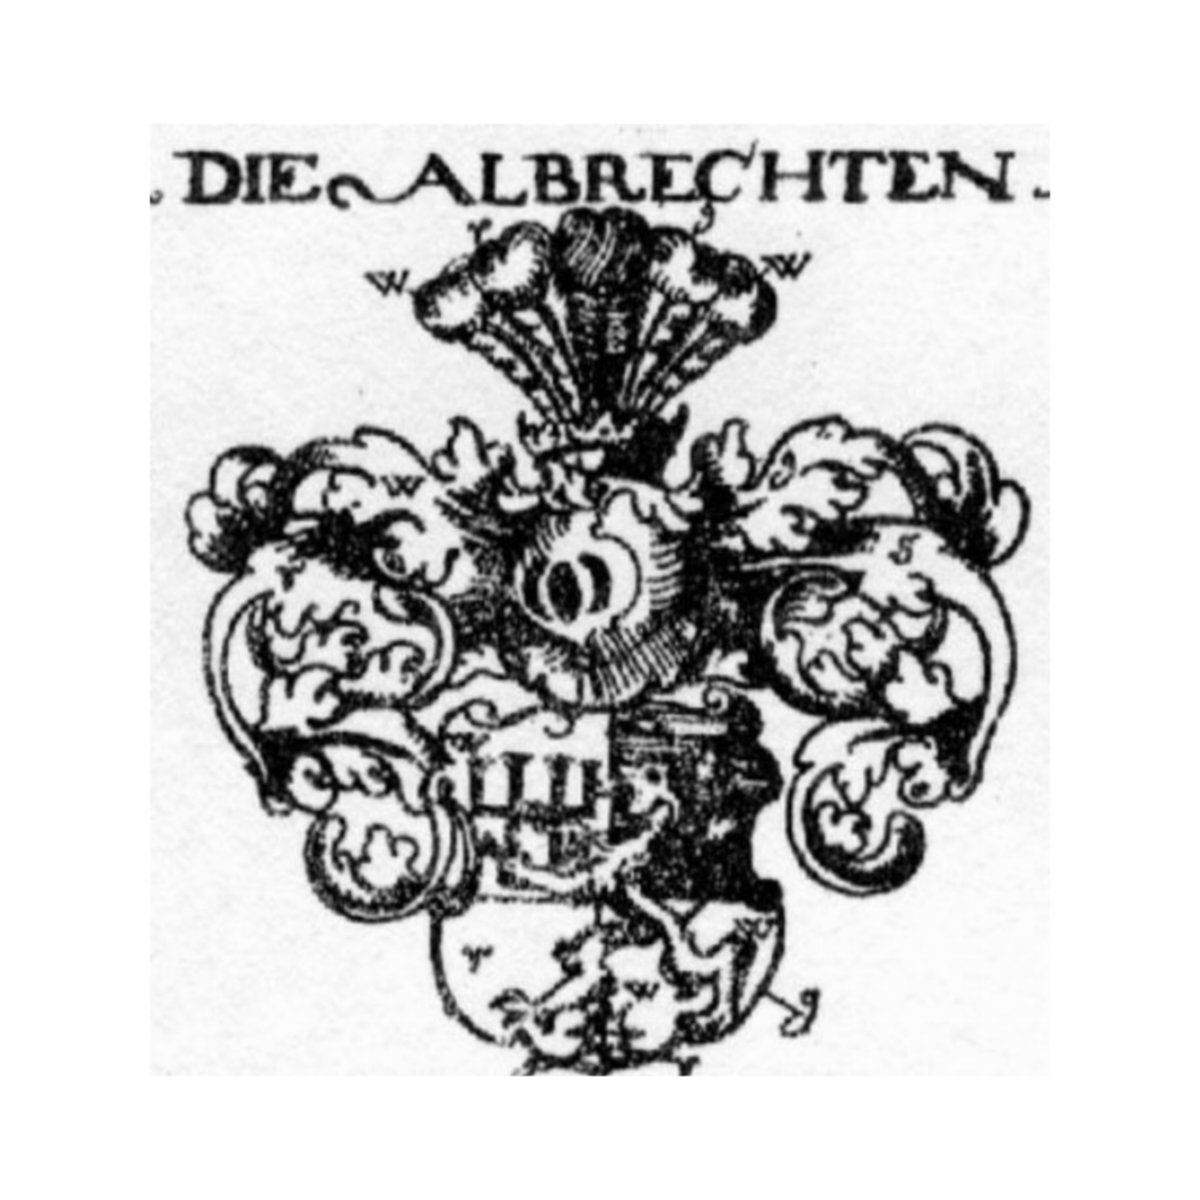 Wappen der FamilieAlbrecht, Albrecht von Albrechtsburg